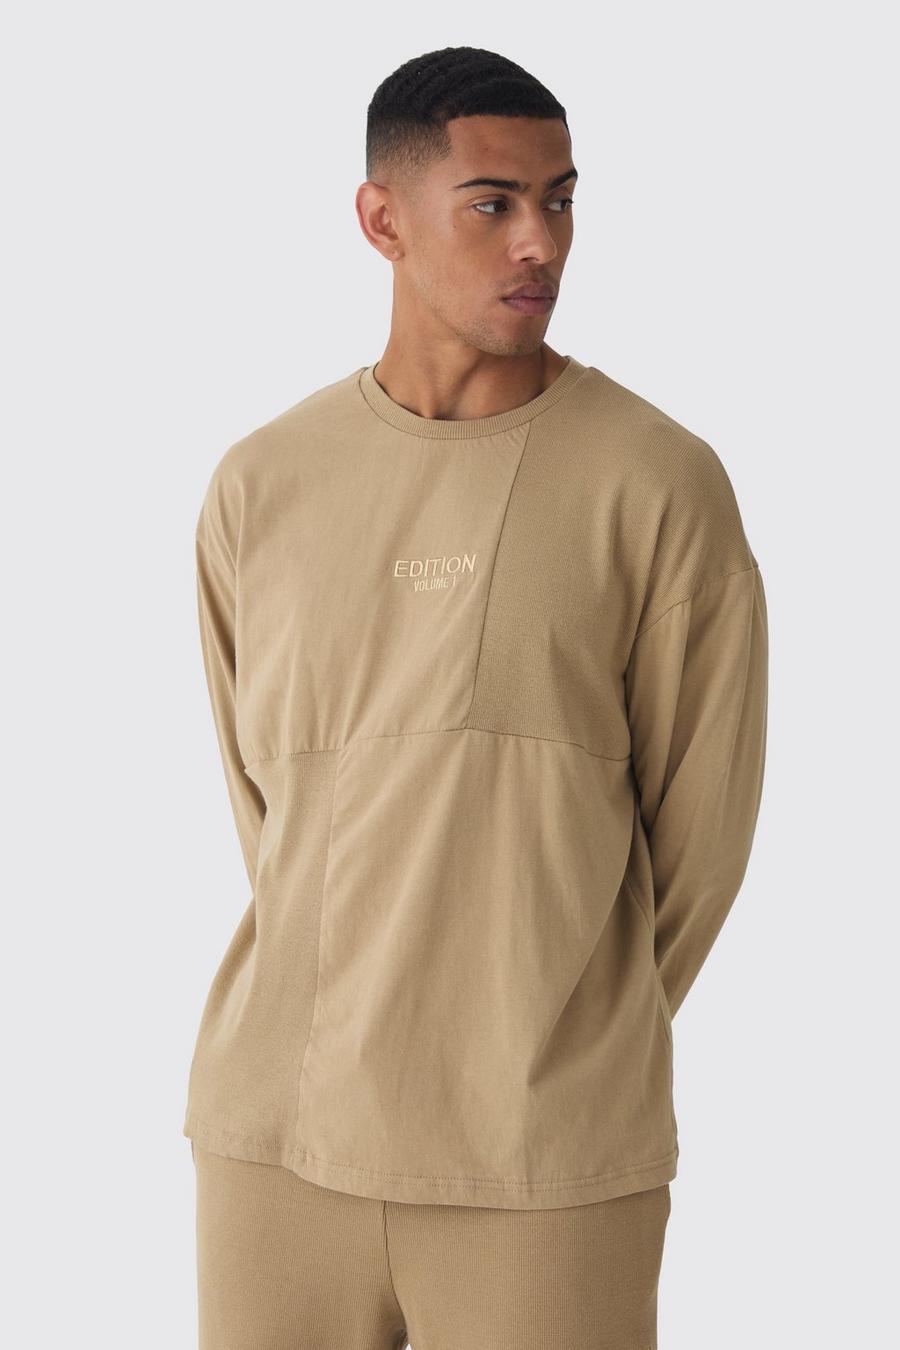 Taupe EDITION Ribbad t-shirt i tjockt tyg med paneler